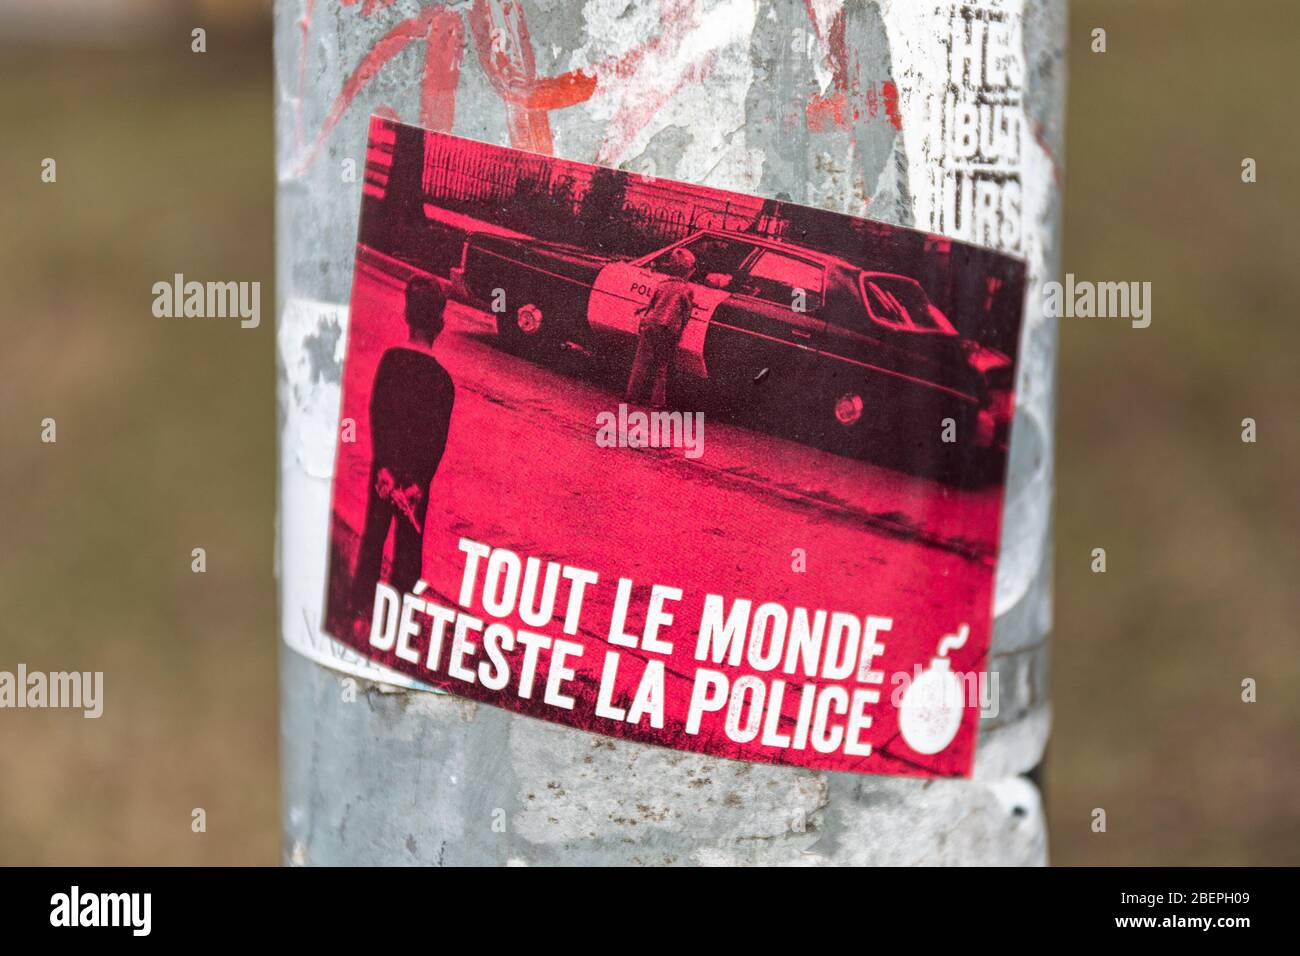 Tout le monde déteste la police. Everybody hates the police. Sticker on a lightning column. Stock Photo